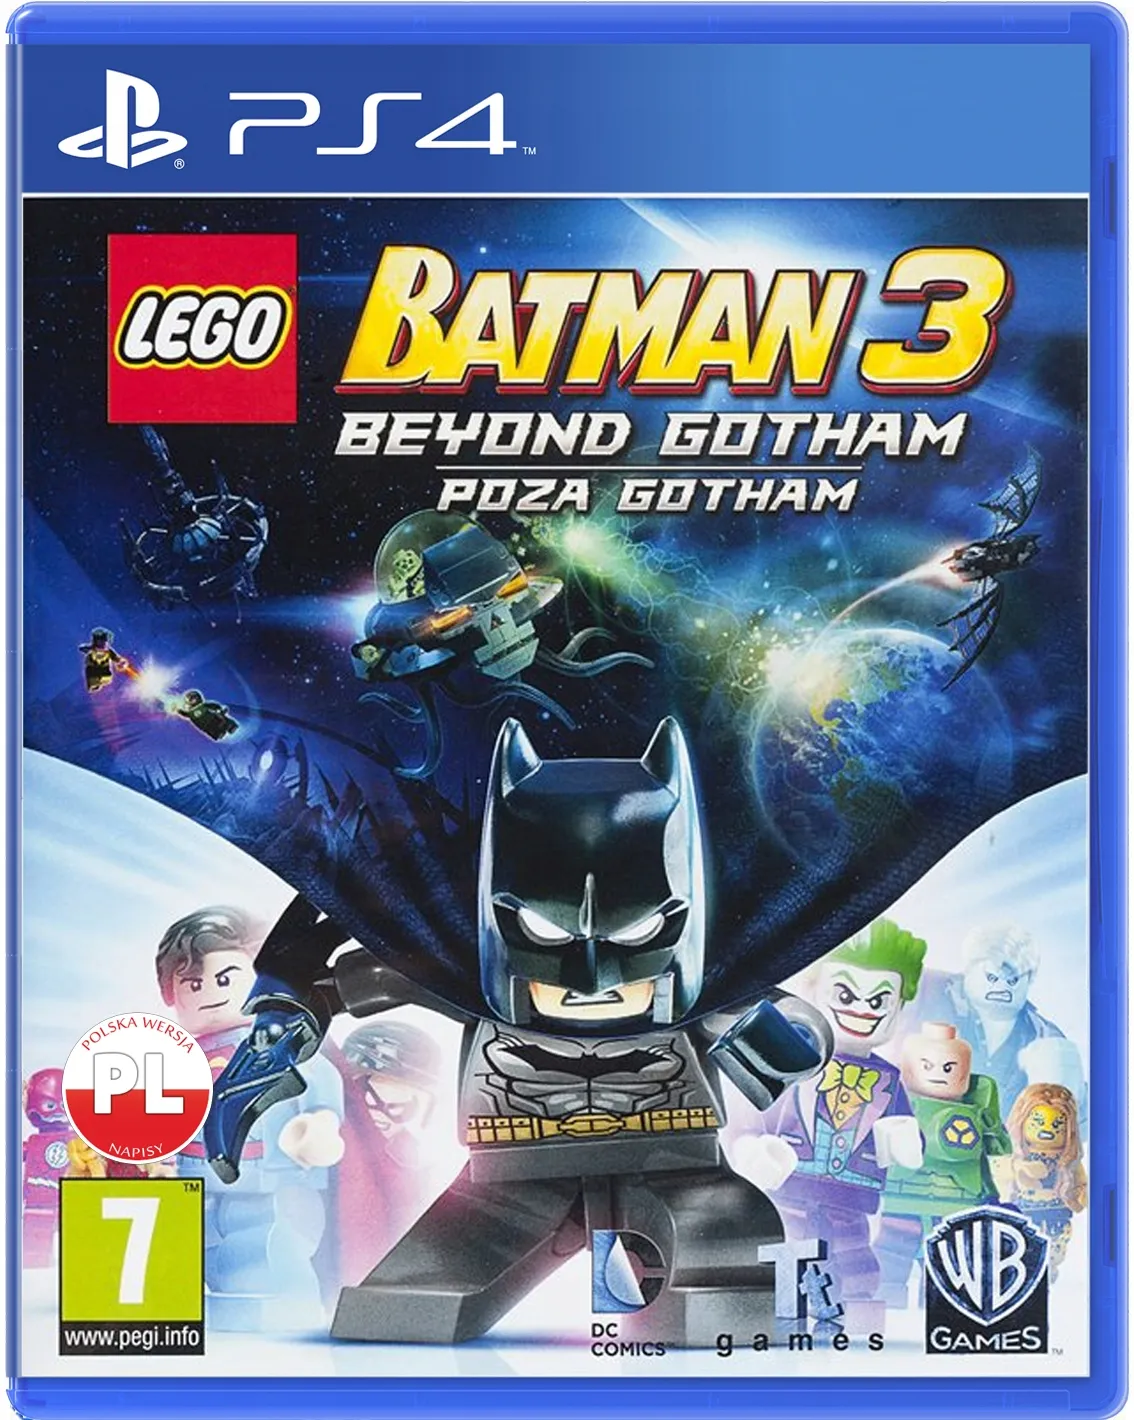 Gra Lego Batman 3 Poza Gotham Pl Ps4 Nowa Gratis Erli Pl